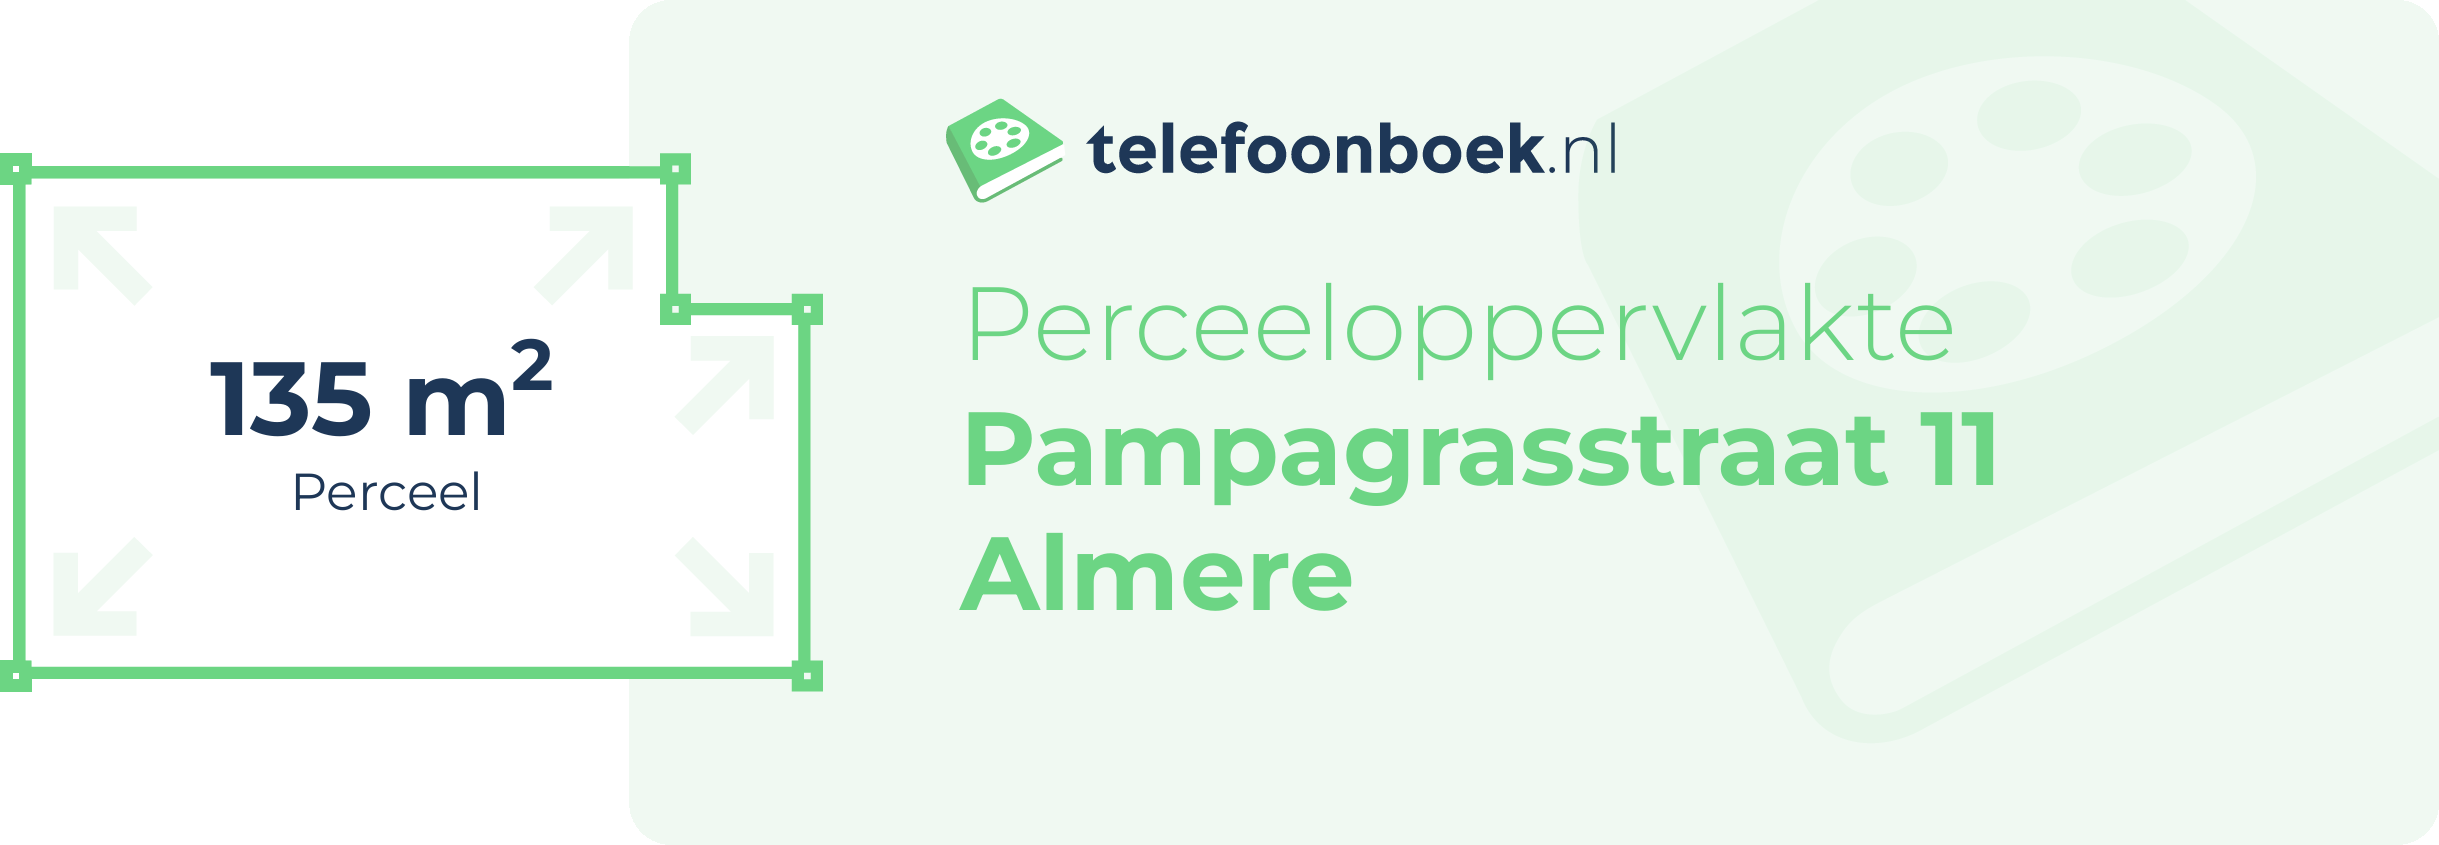 Perceeloppervlakte Pampagrasstraat 11 Almere